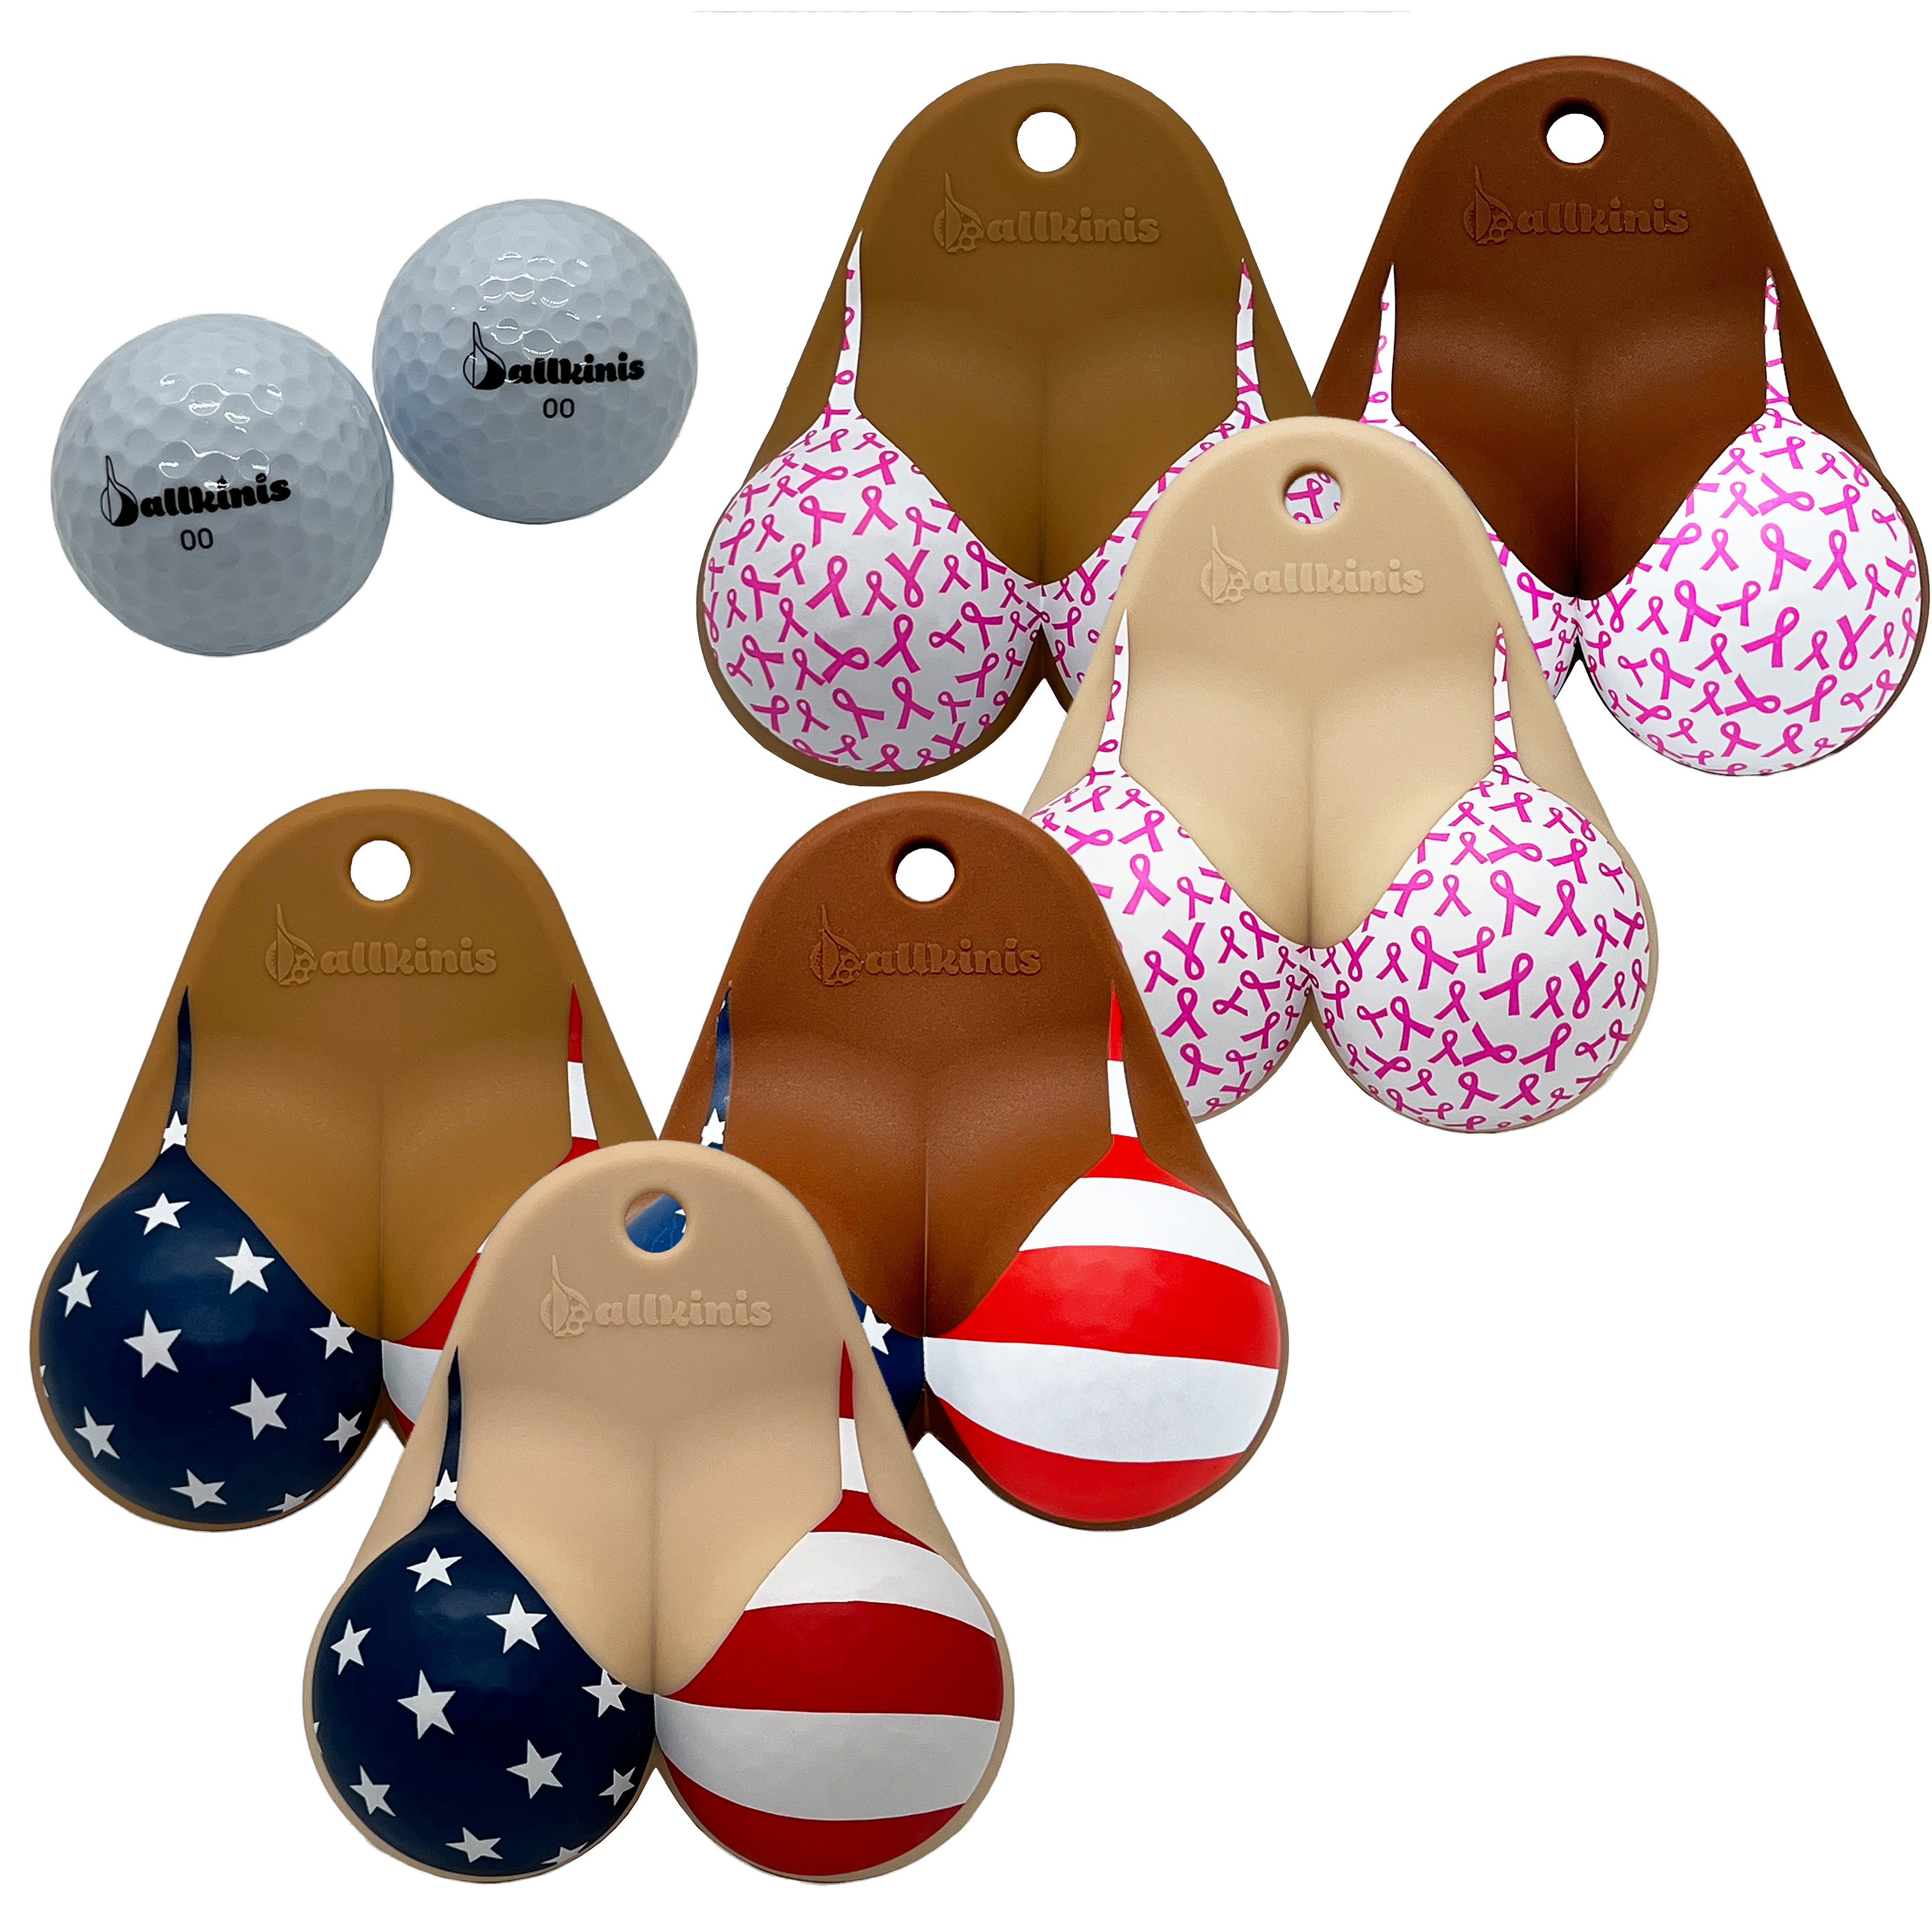 Ballkinis™ Top USA Bikini Funny Golf Ball Holder Pouch Sack Gift Innovative Souvenirs Club Storage